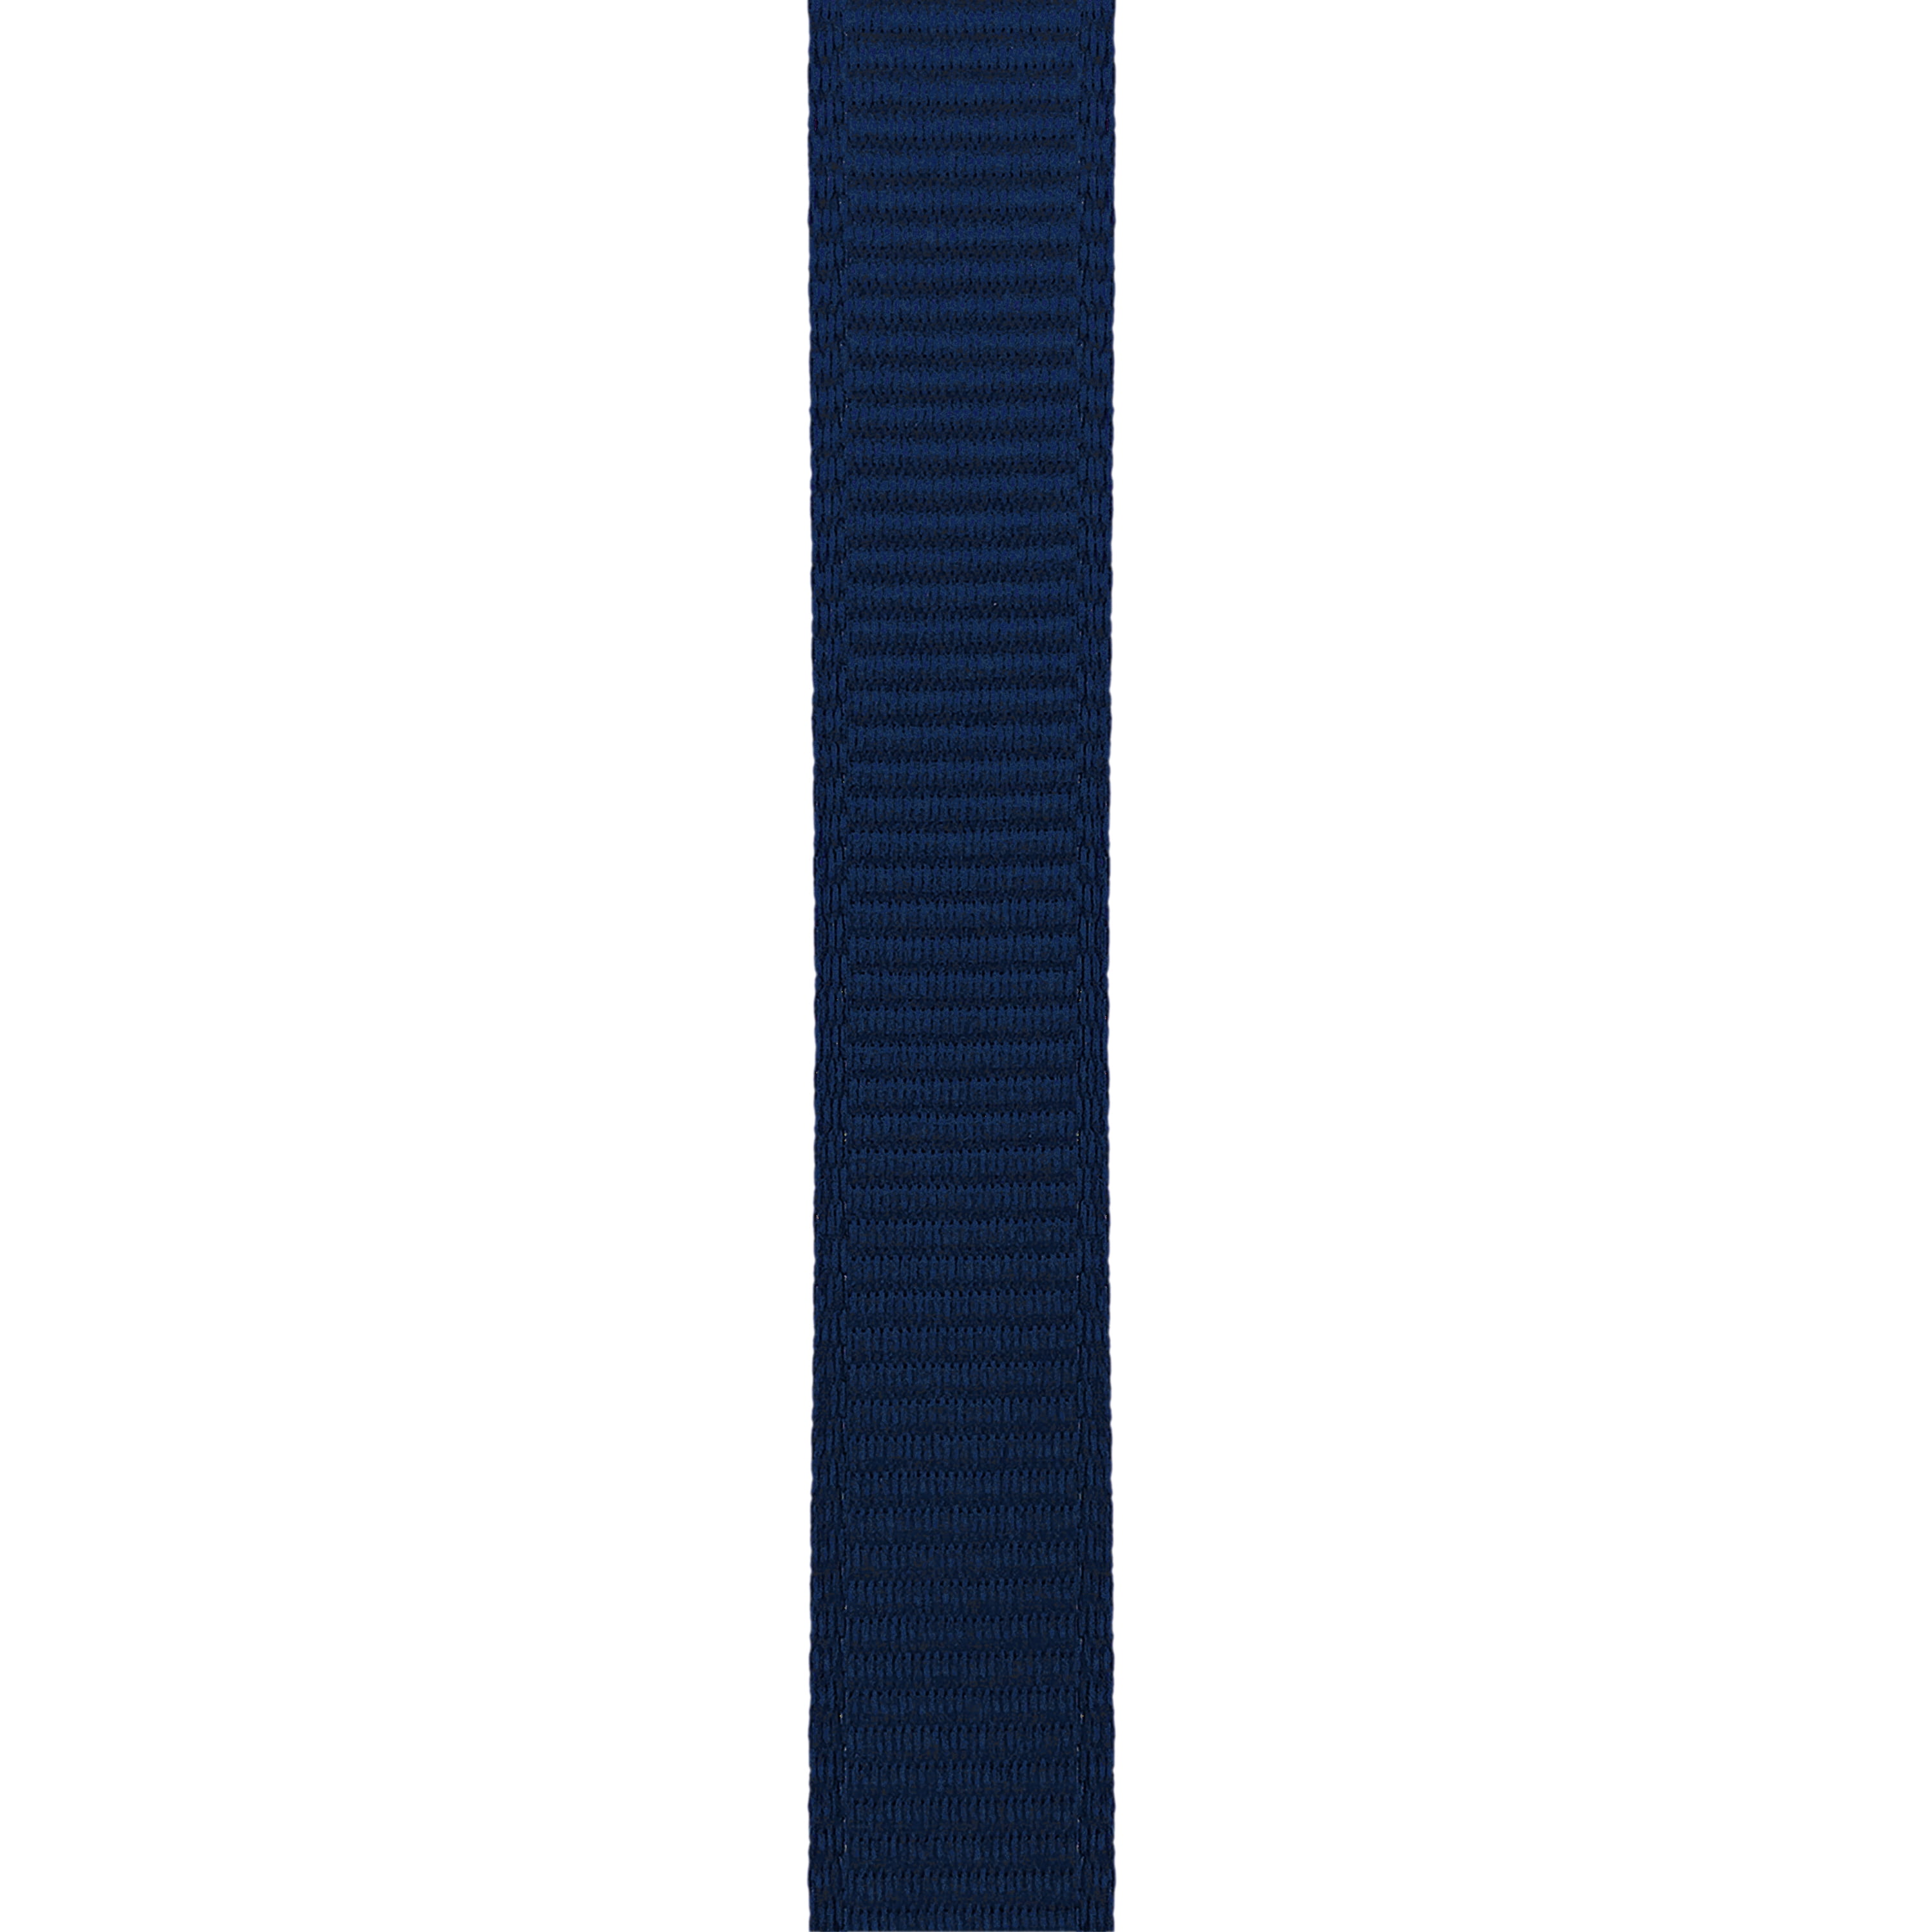 Navy Blue Texture 3/4 Inch x 100 Yards Grosgrain Ribbon - Light Navy Blue  Ribbon at JAM Paper